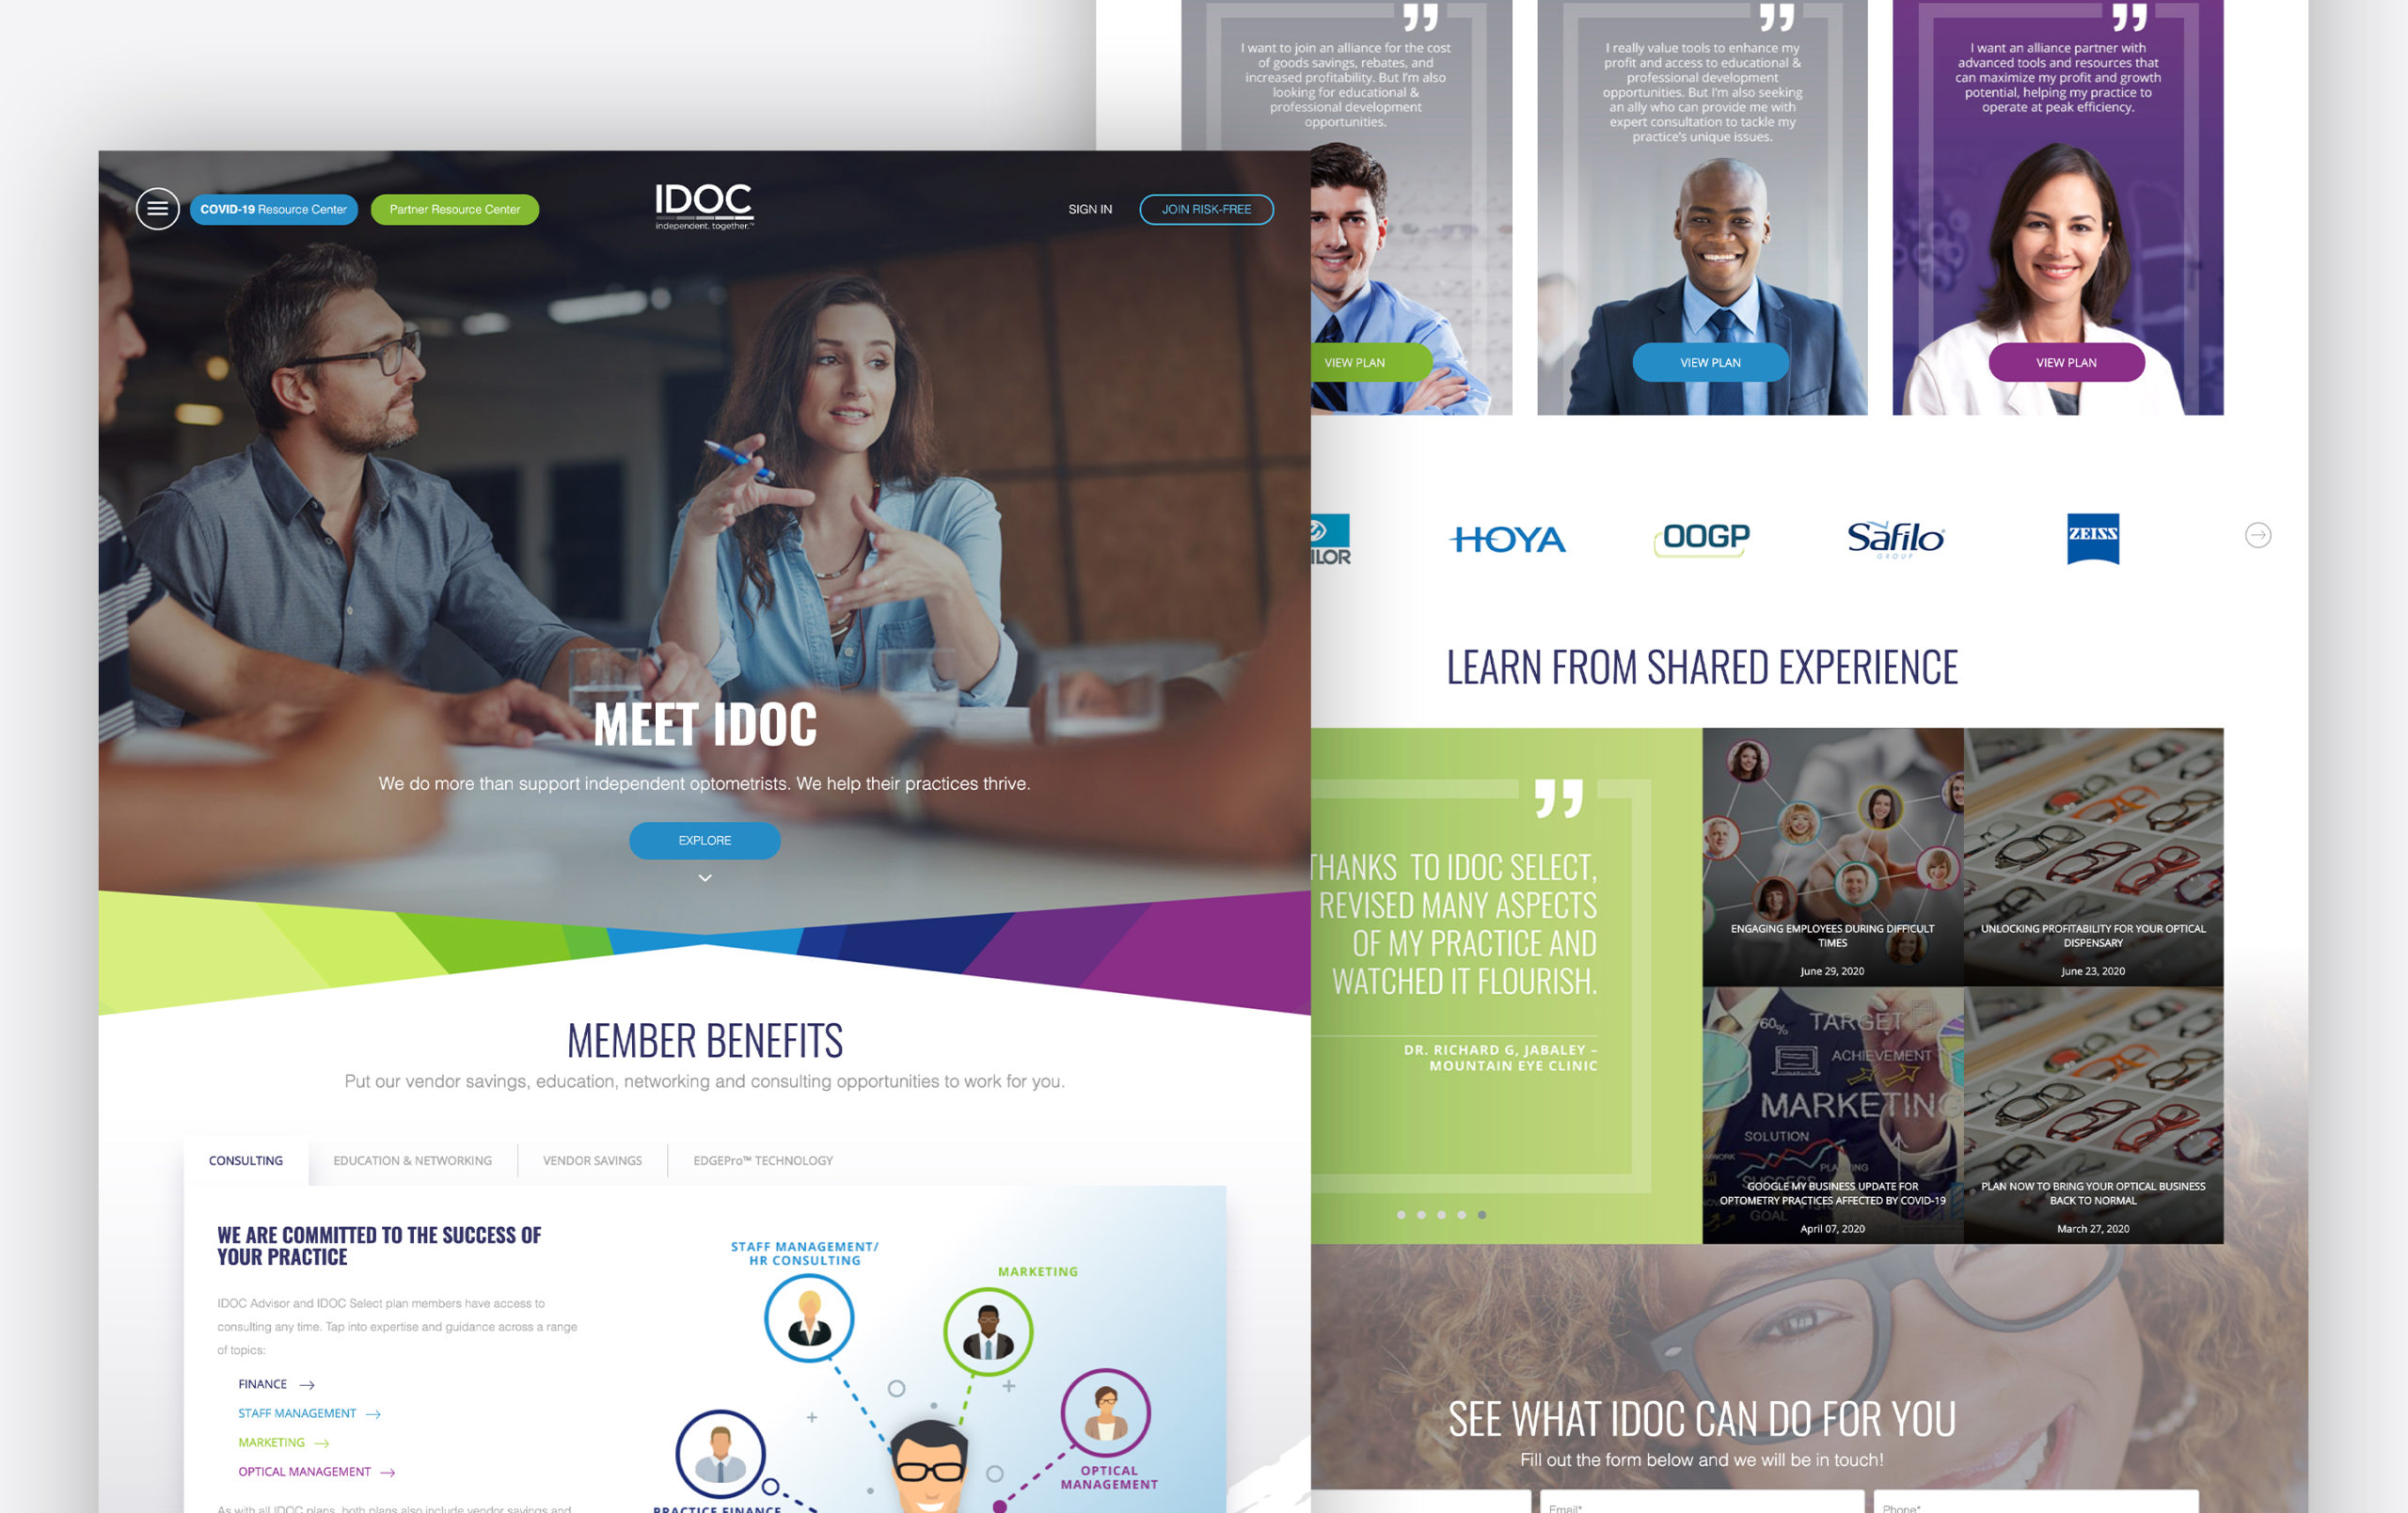 IDOC Website Launch